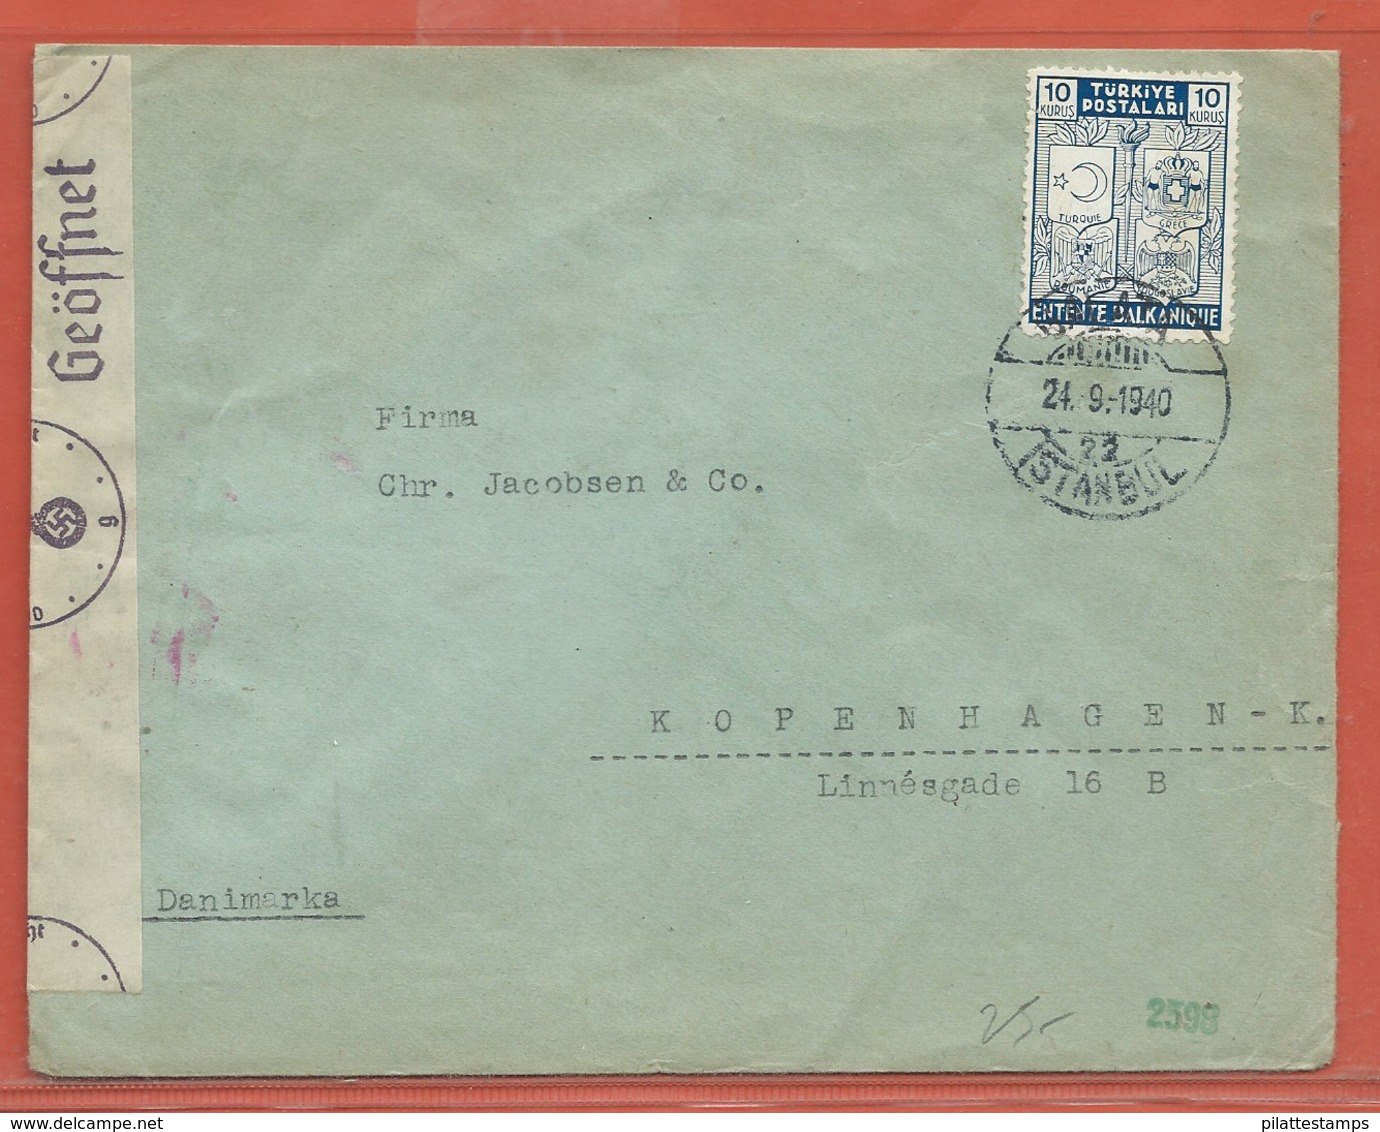 TURQUIE LETTRE CENSUREE DE 1940 DE GALATA POUR COPENHAGUE - Briefe U. Dokumente